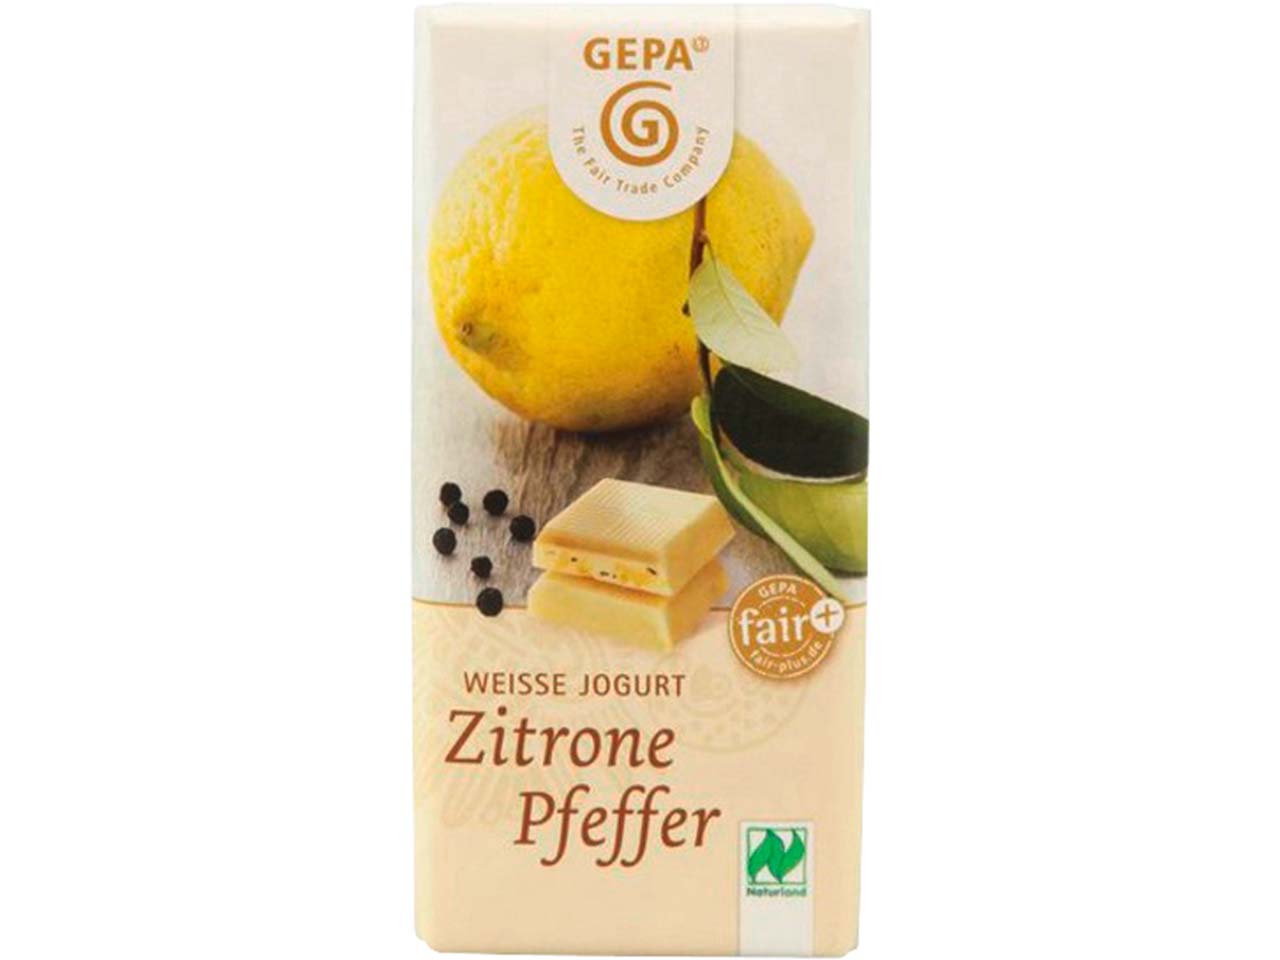 GEPA Bio-Schokolade "Zitrone Pfeffer